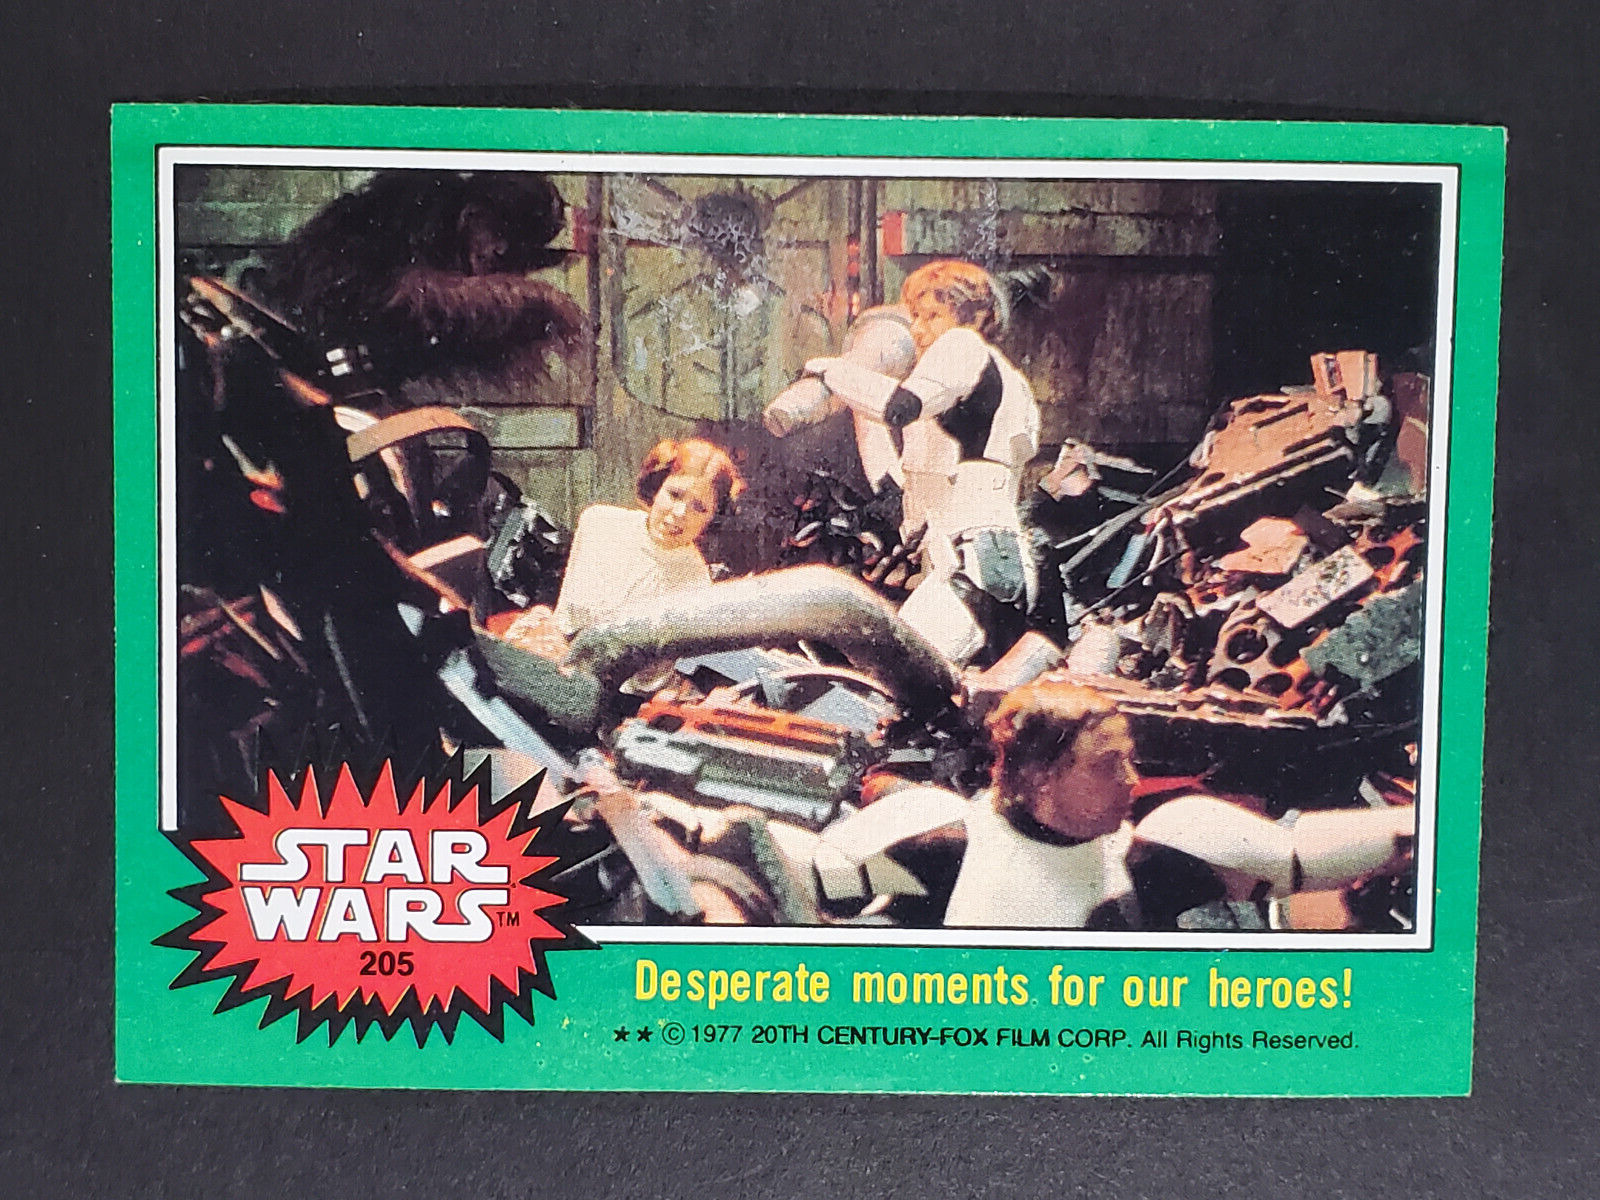 1977 TOPPS STAR WARS CARD #205 GREEN SERIES EXCELLENT EX-MT GRADE